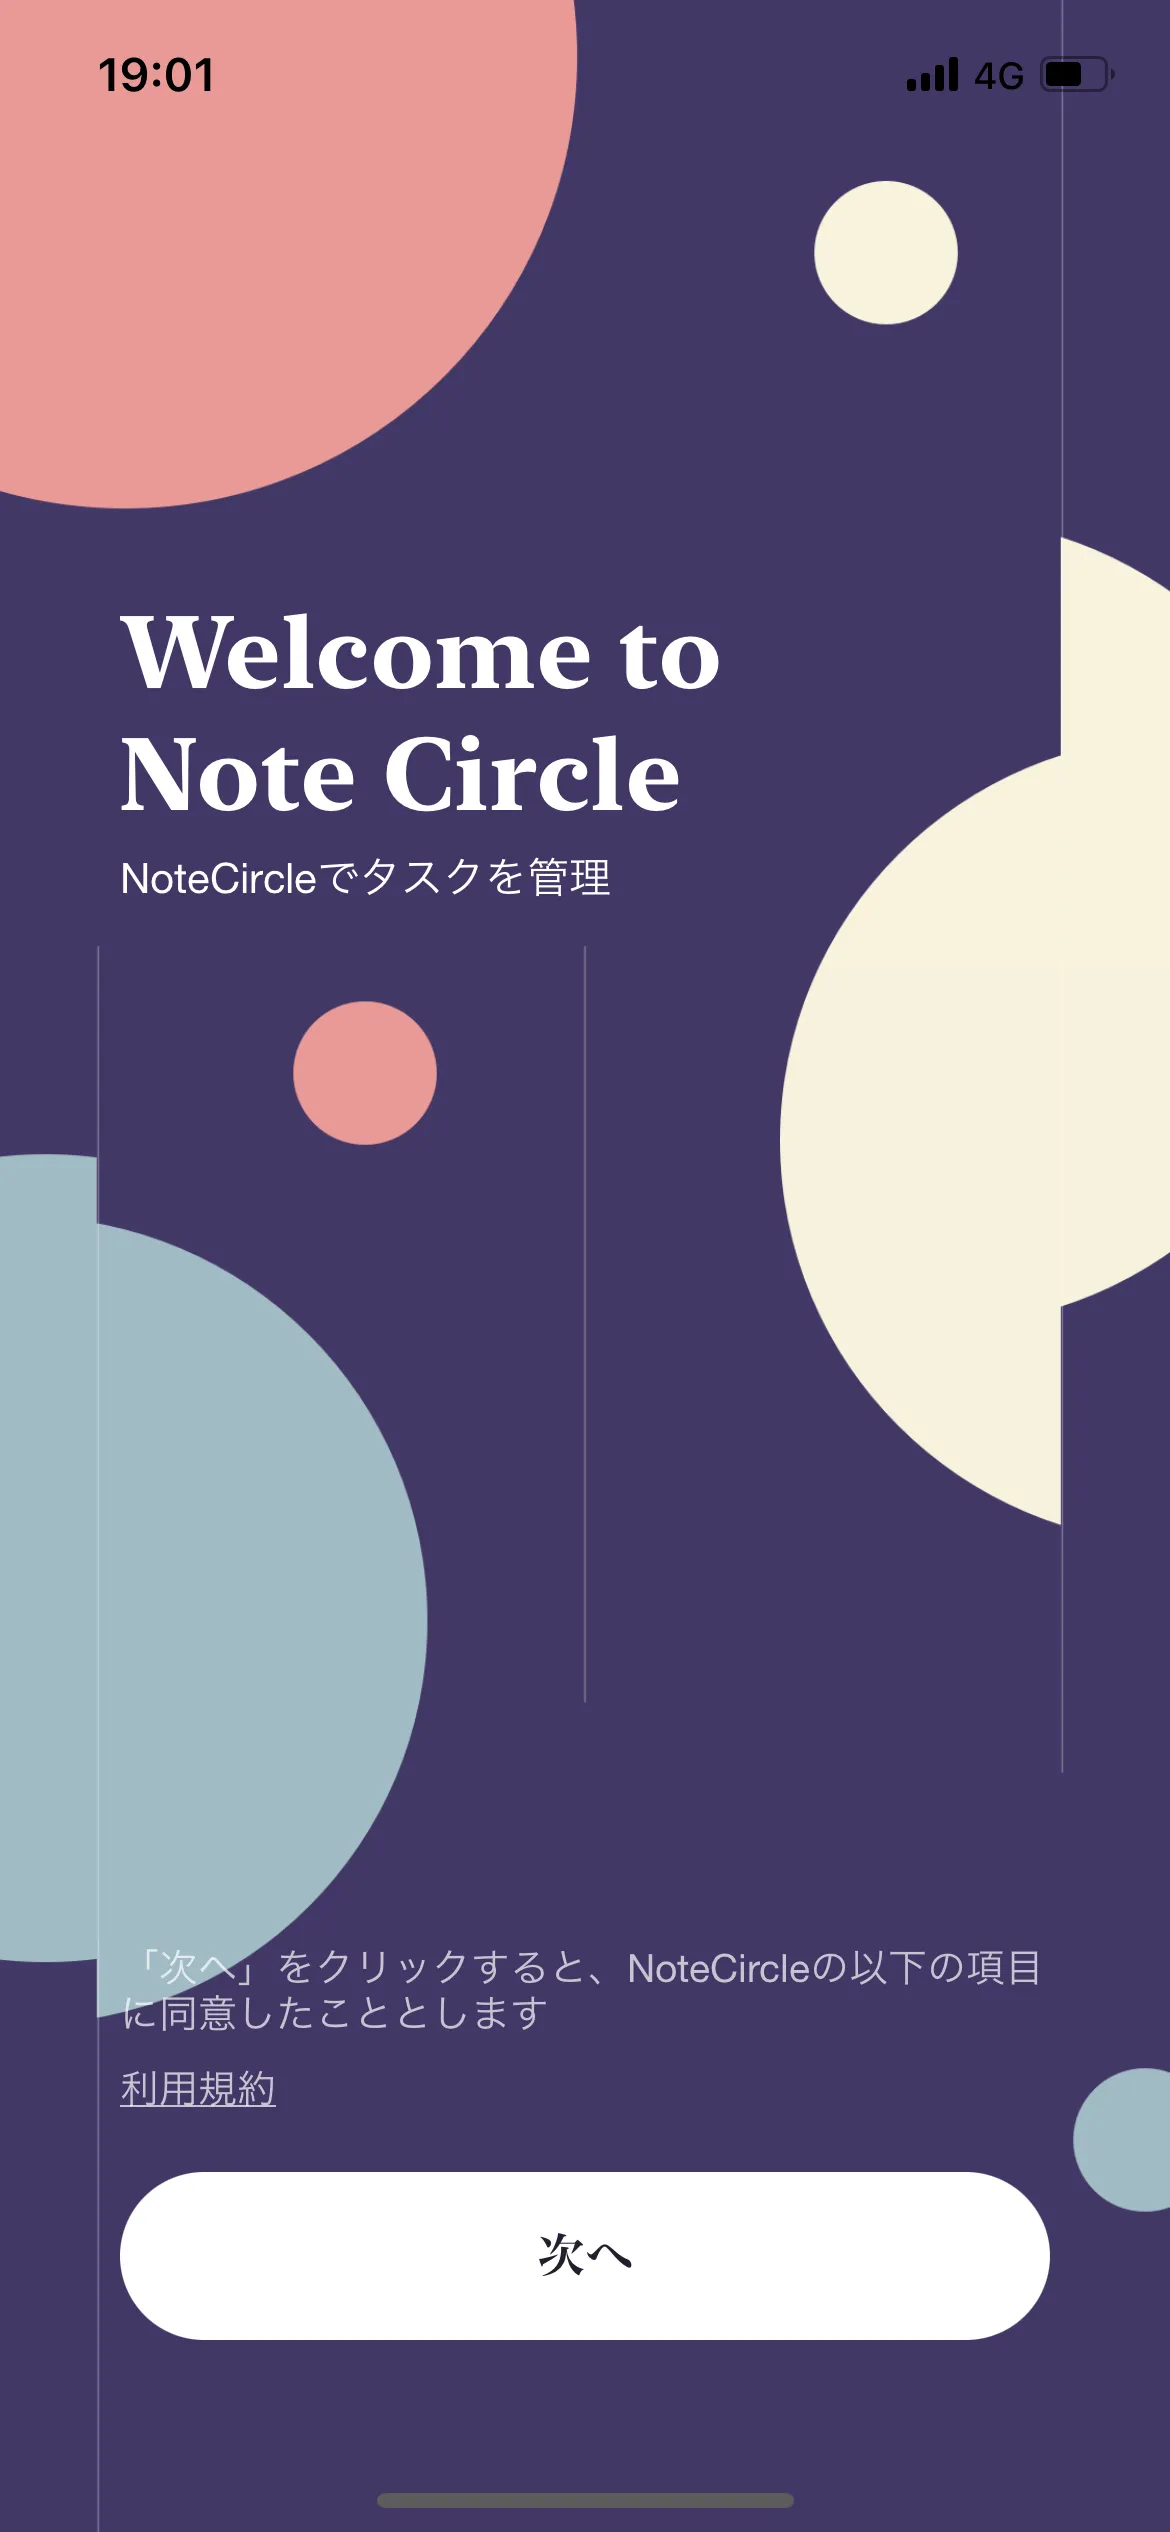 NoteCircle オンボーディング screen